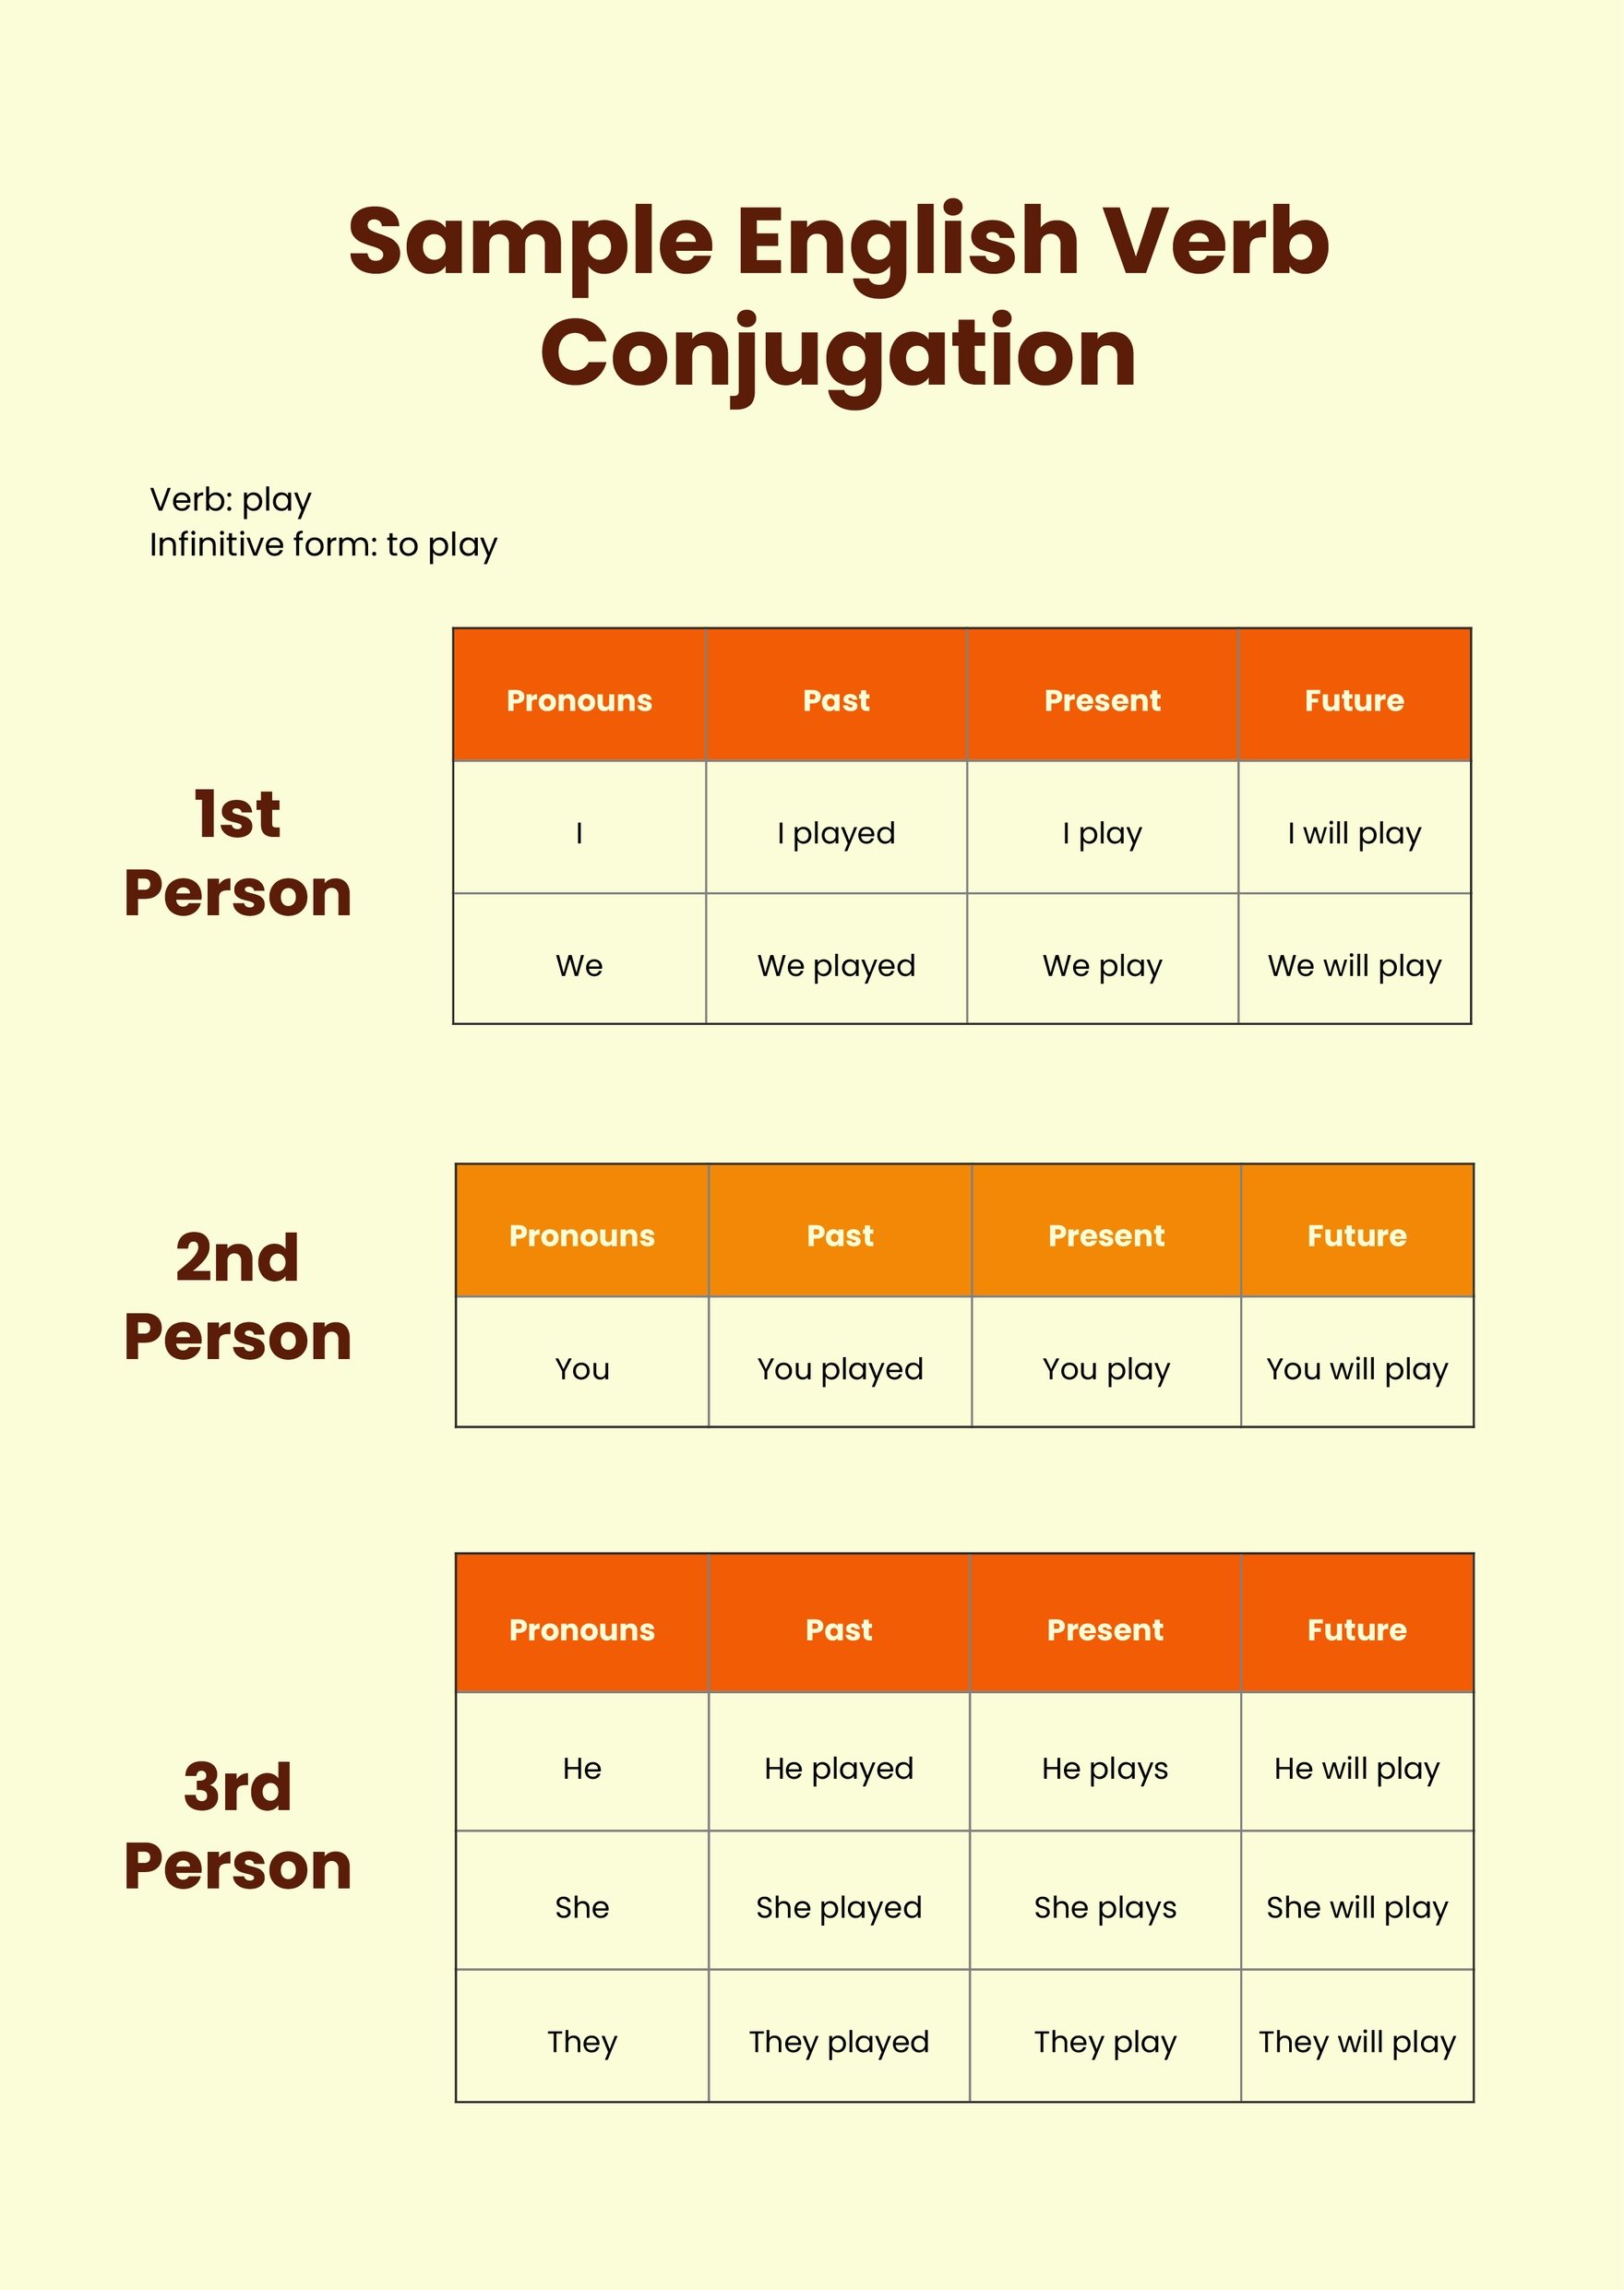 FREE Conjugation Chart Template Download in PDF, Illustrator